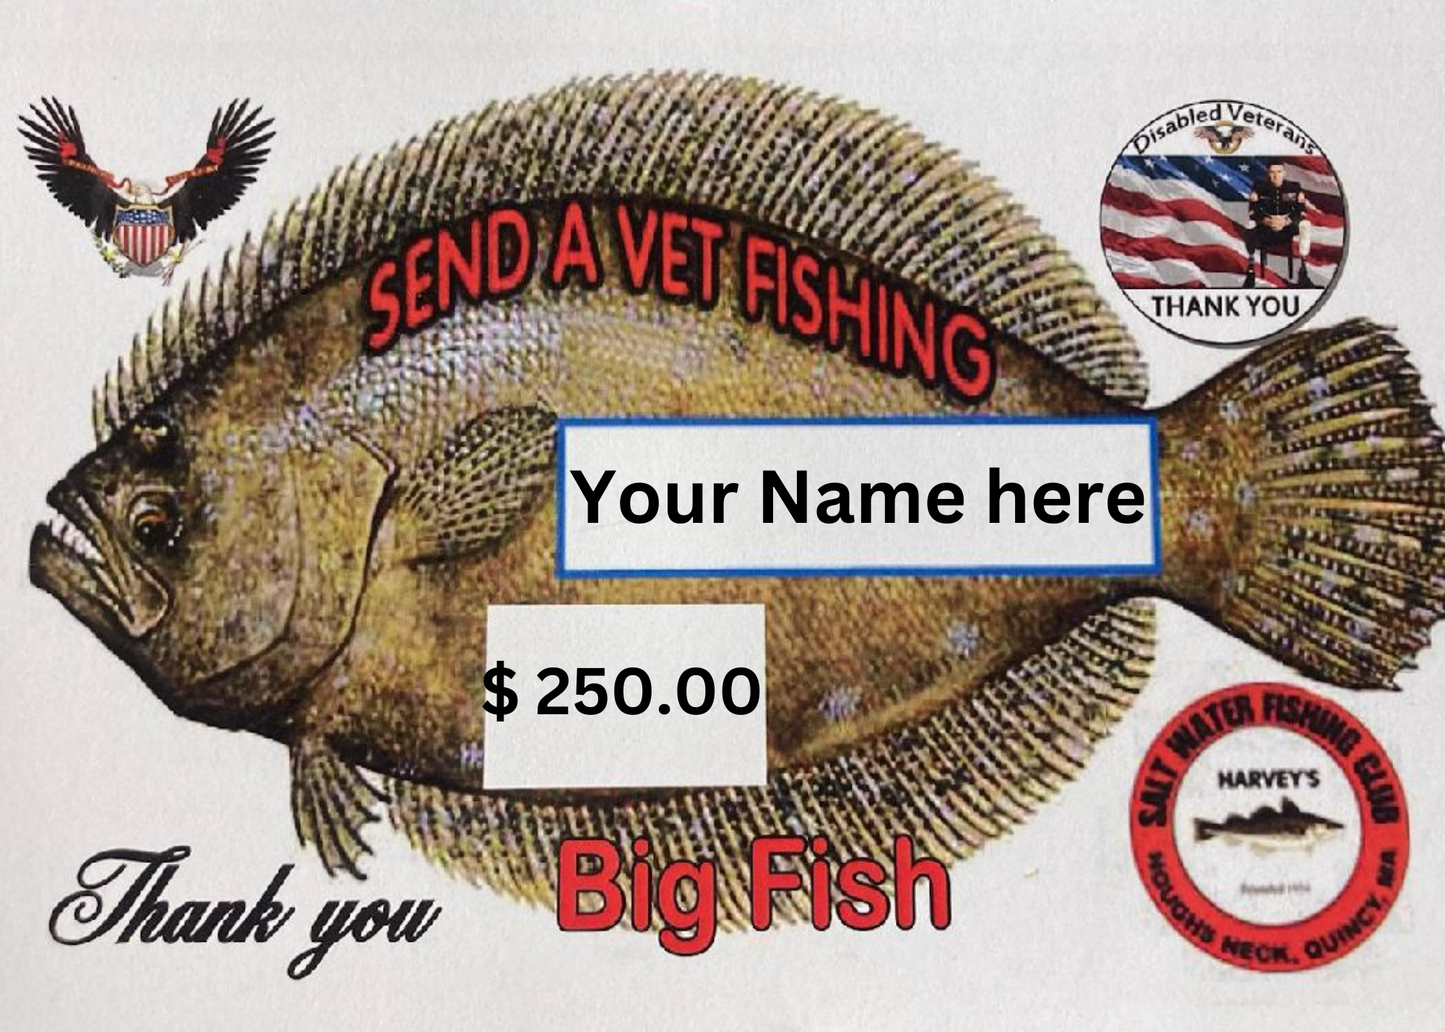 $ 250.00 Donation Card